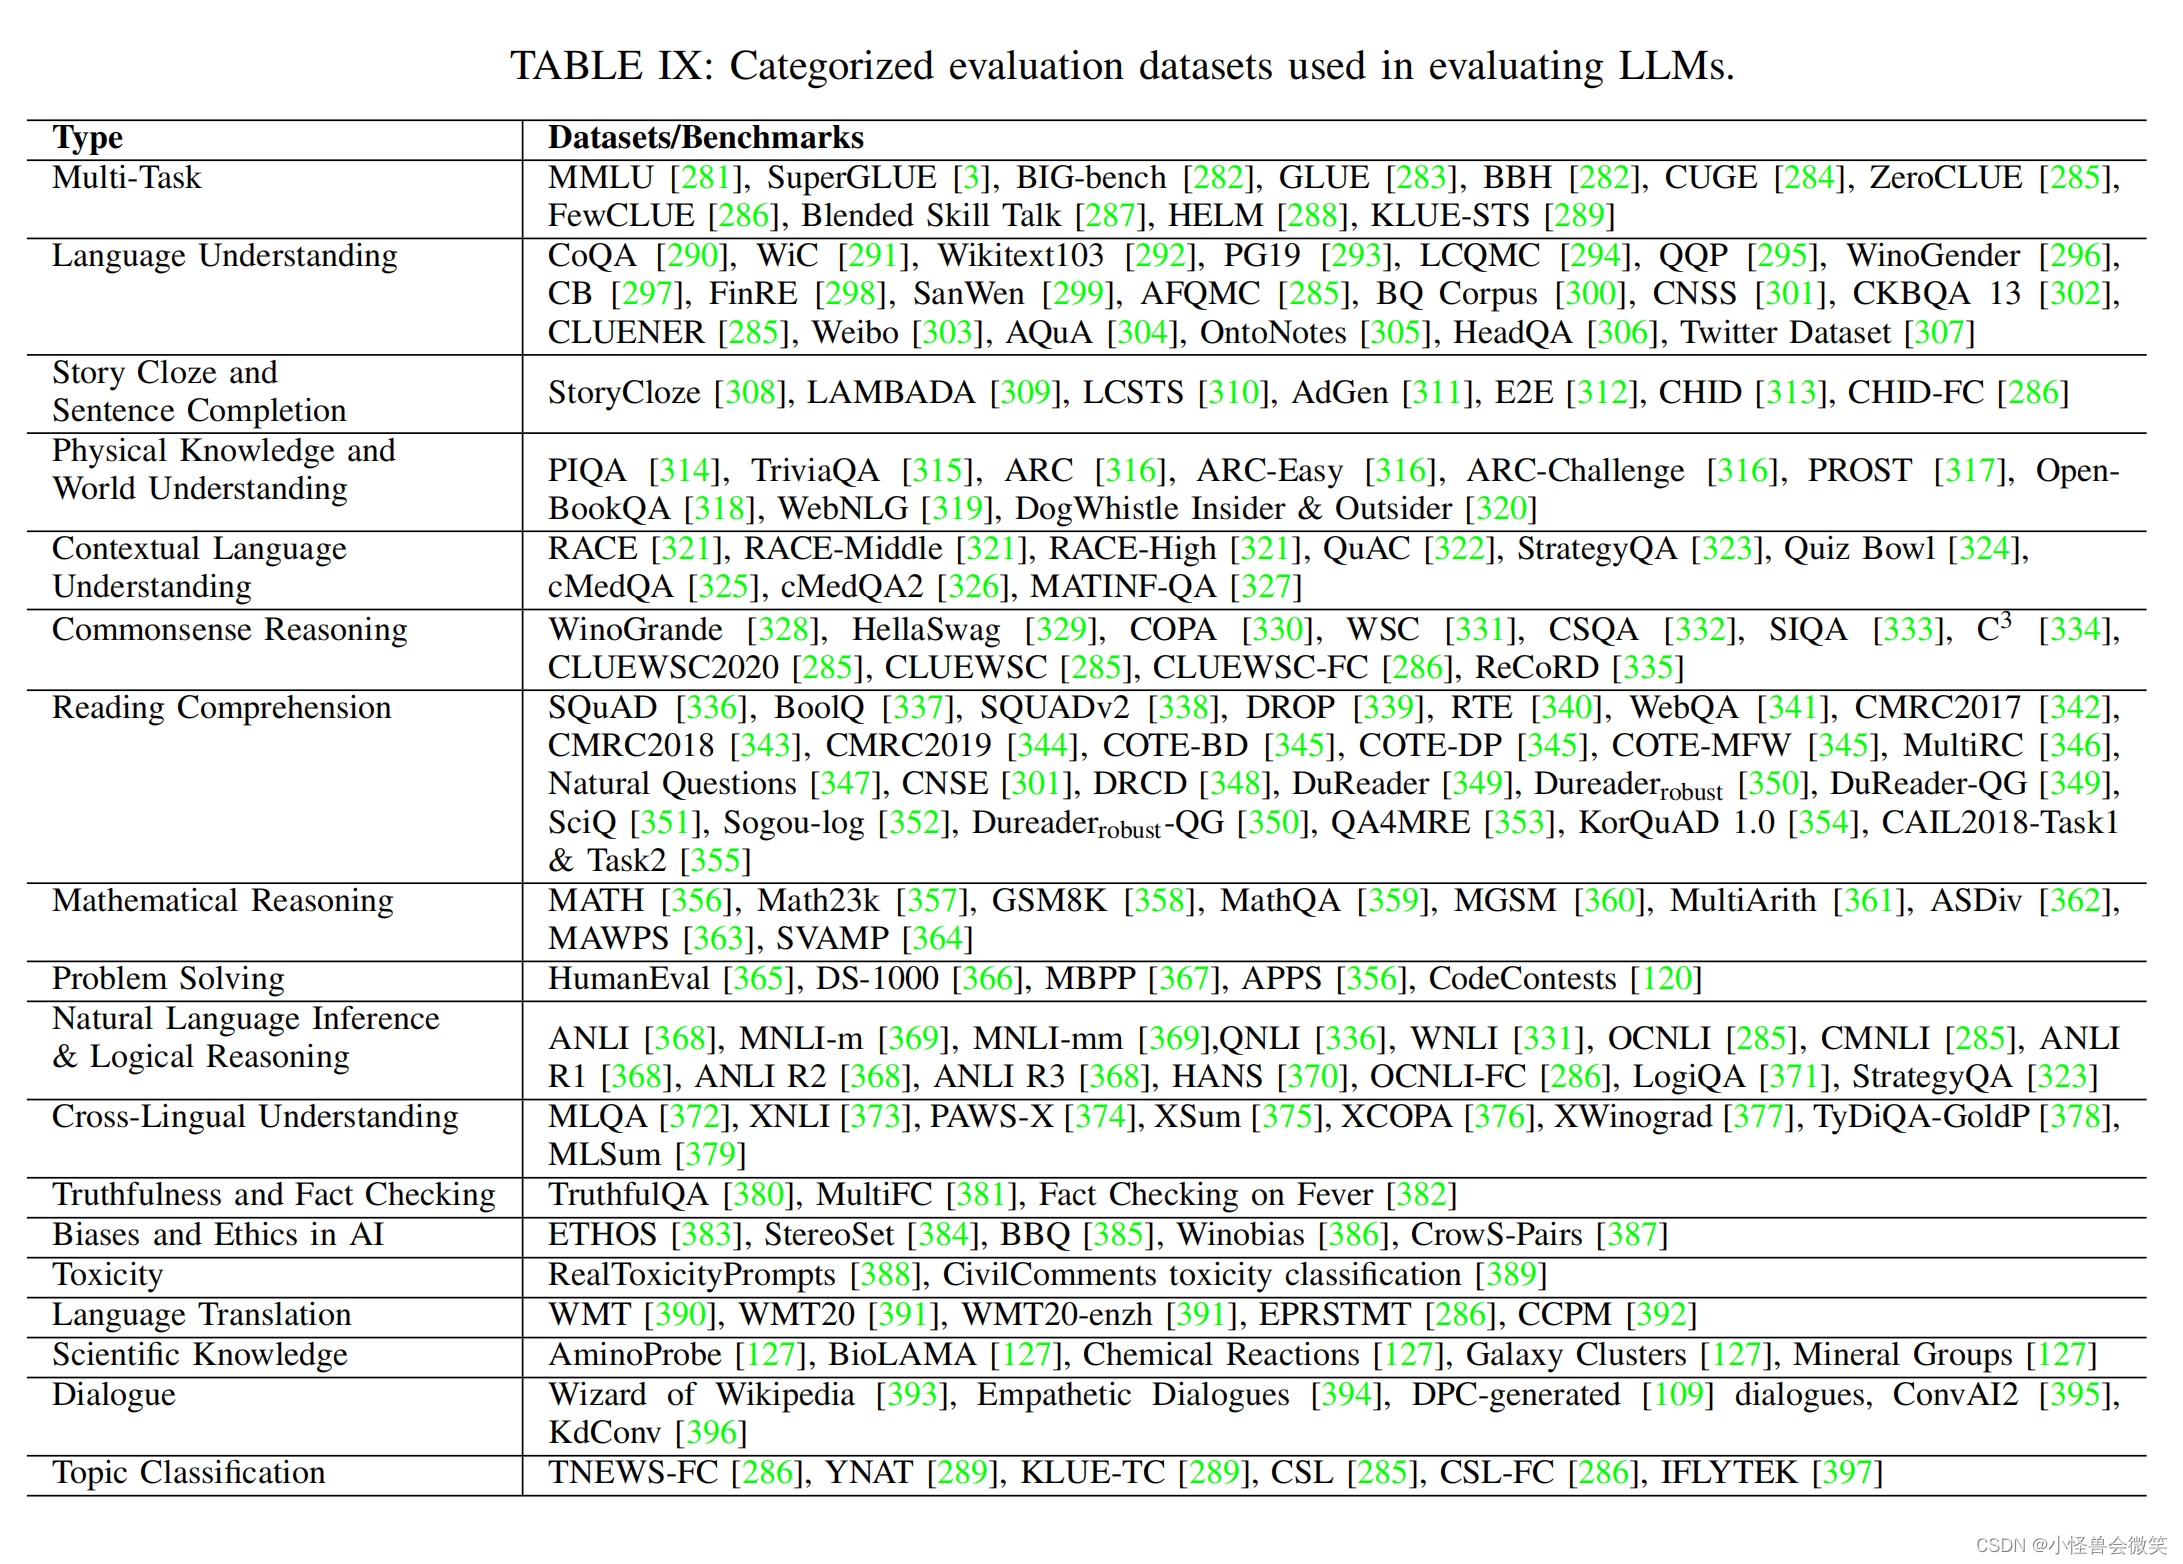 大模型的全面回顾，看透大模型 | A Comprehensive Overview of Large Language Models_语言模型_33